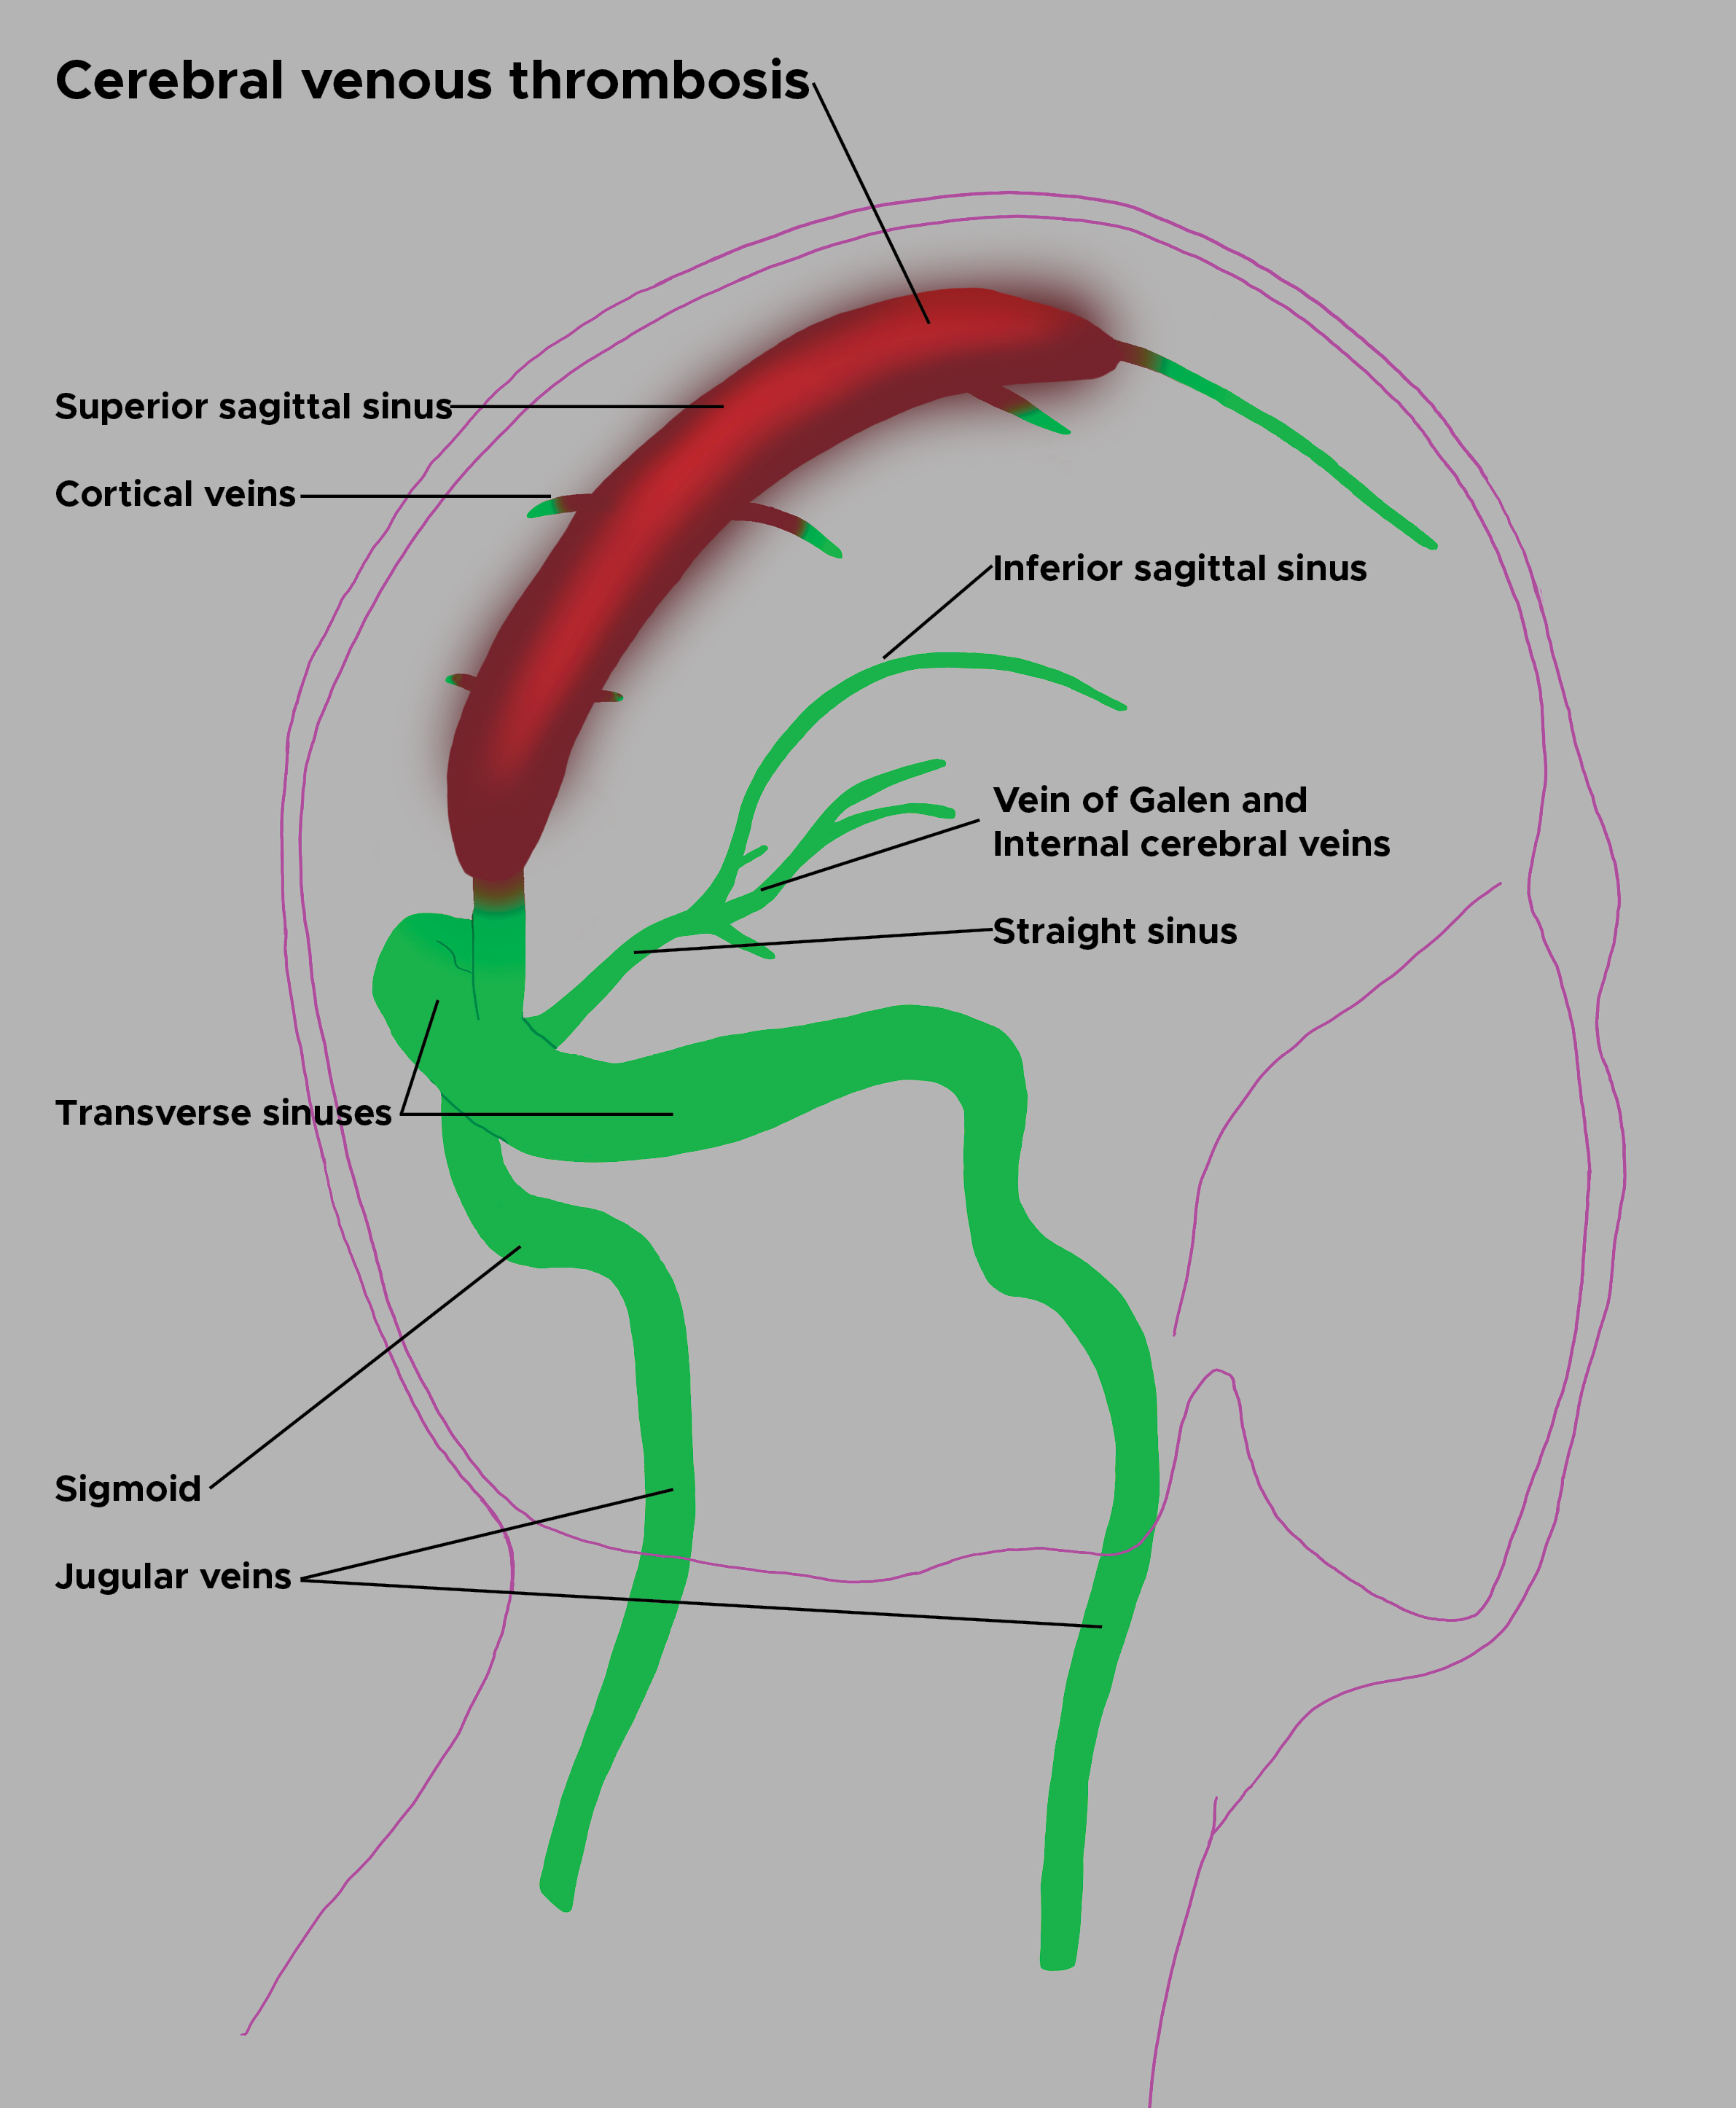 Illustration of cerebral venous thrombosis